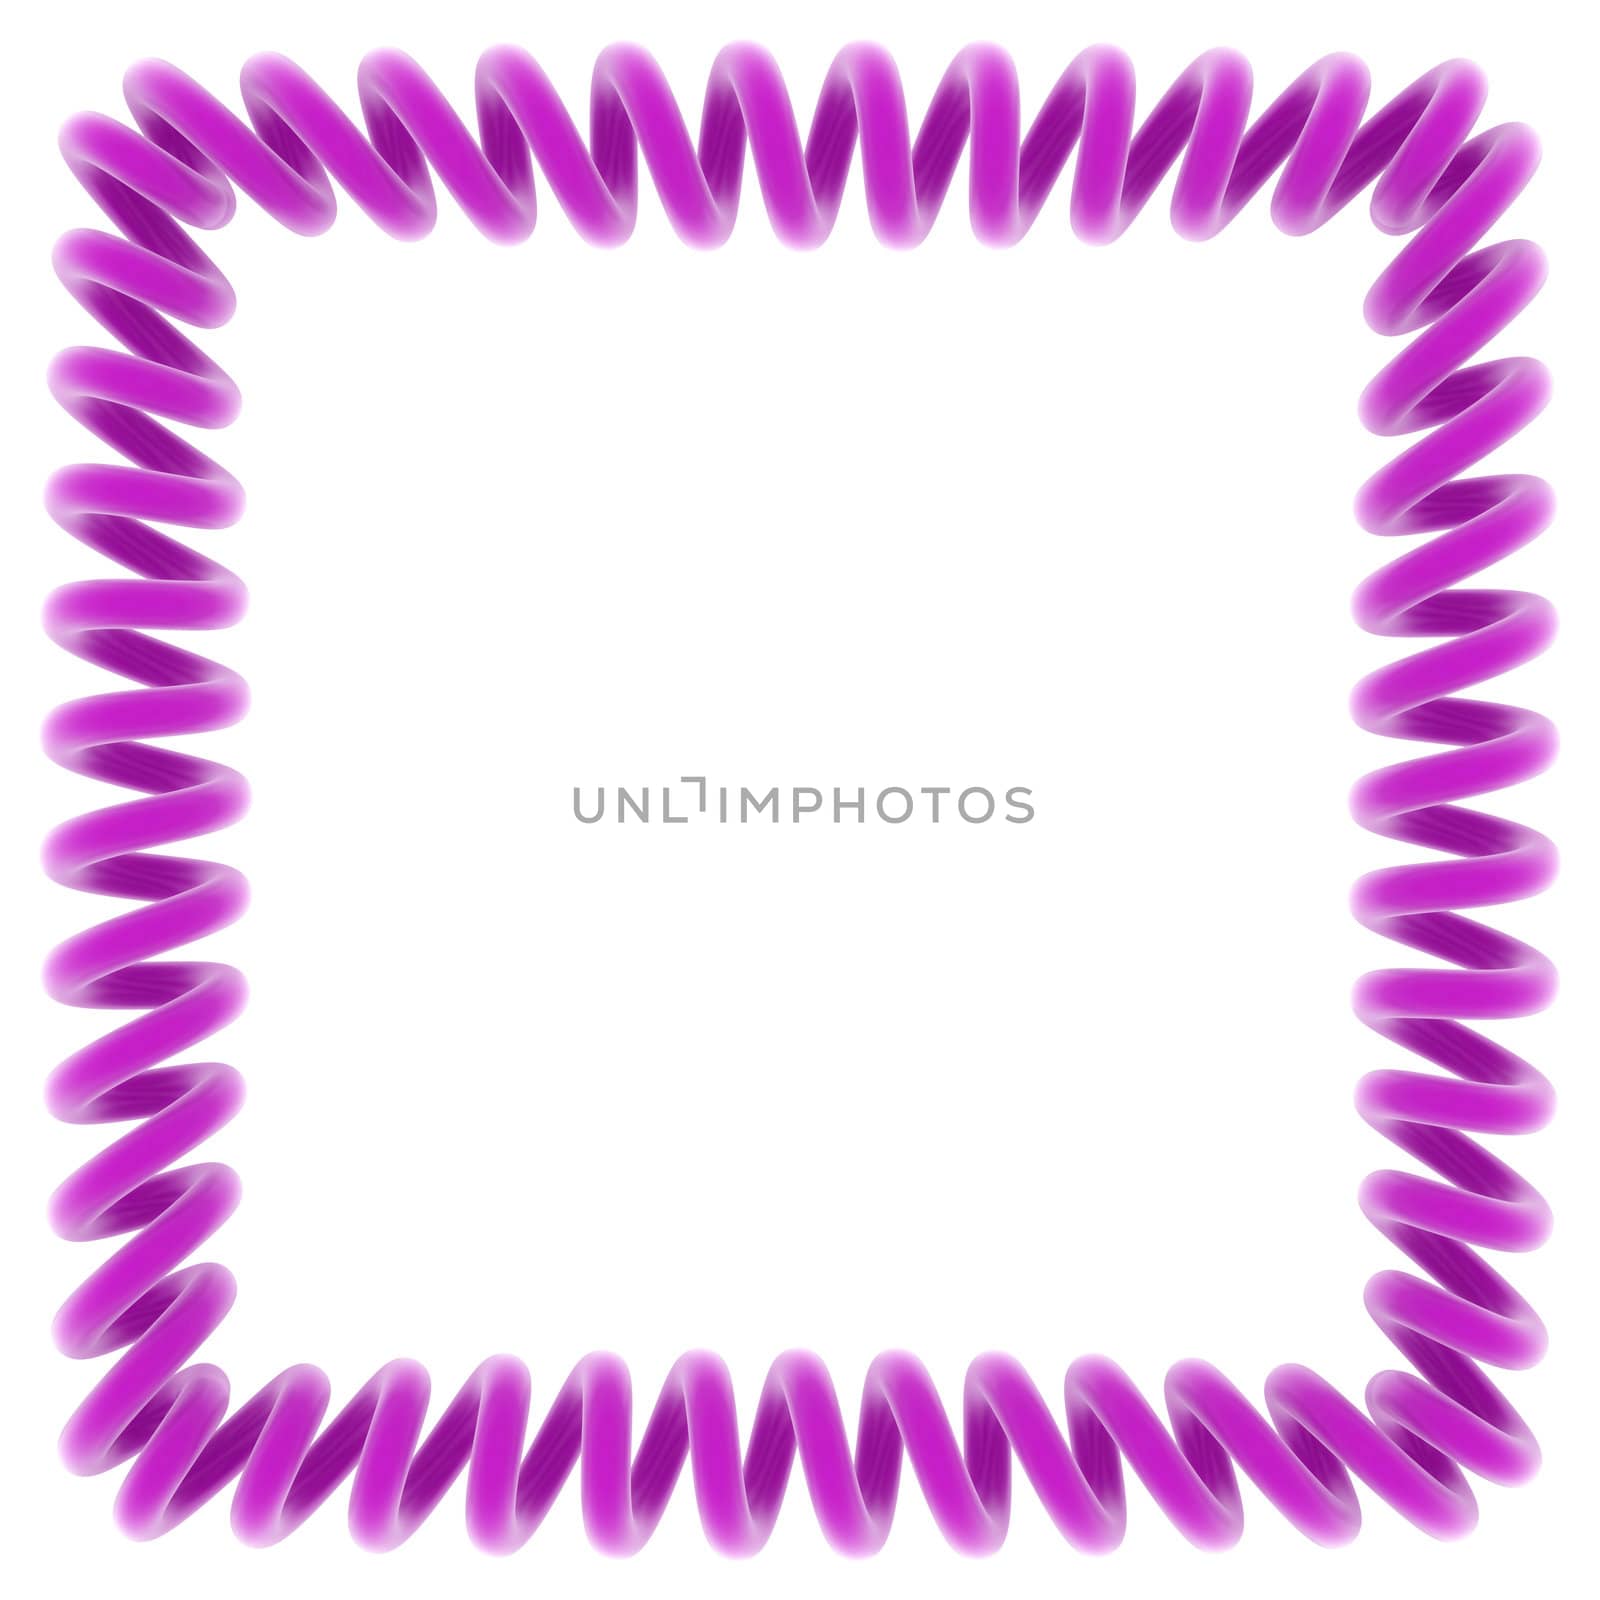 Purple spiral frame on white, 3d render